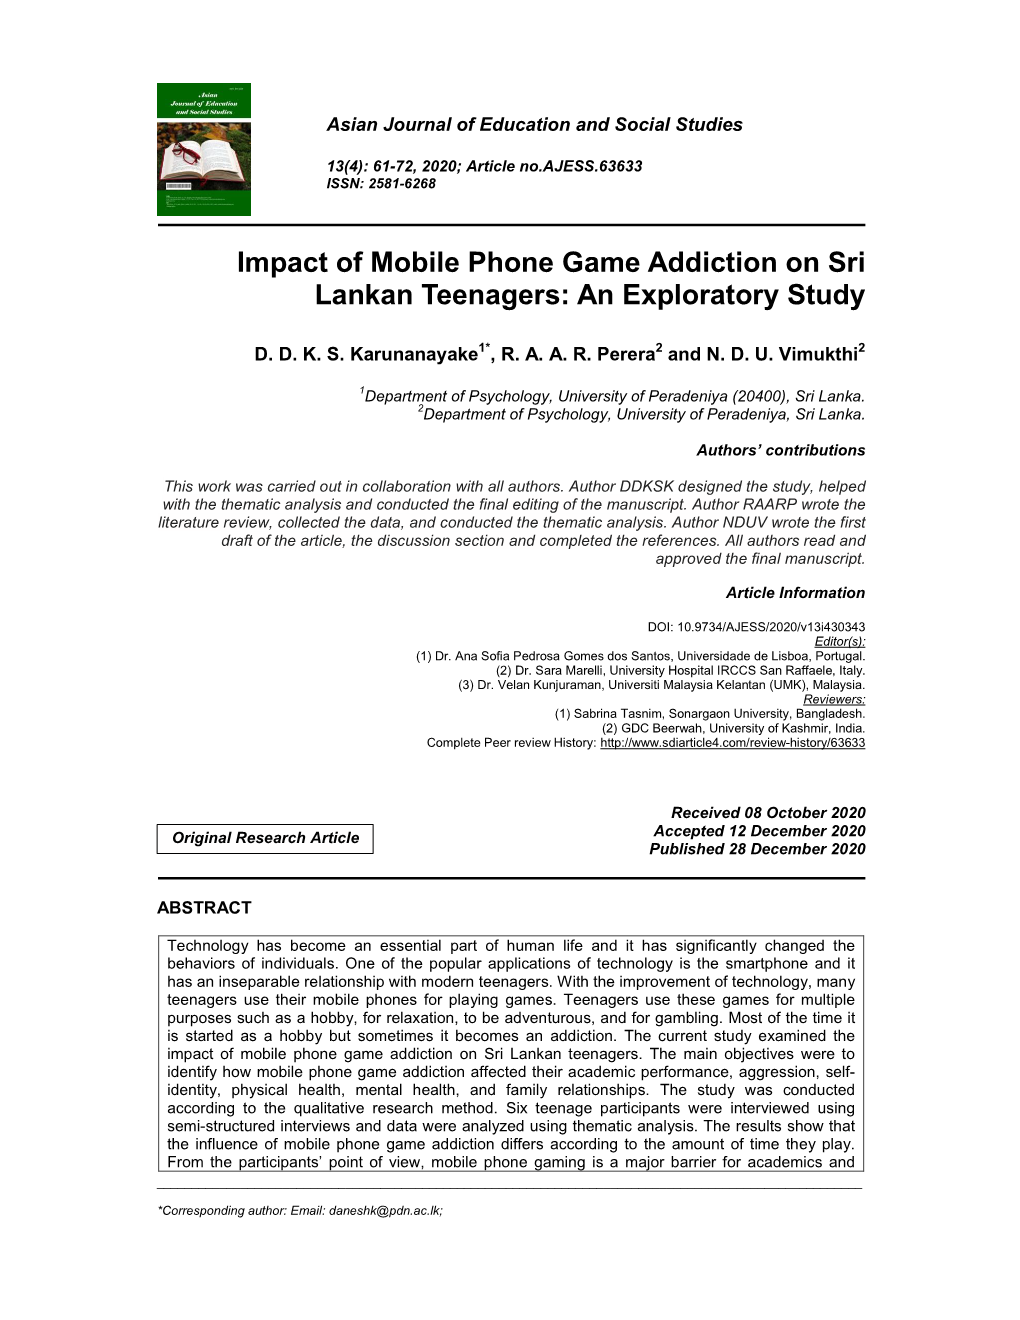 Impact of Mobile Phone Game Addiction on Sri Lankan Teenagers: an Exploratory Study